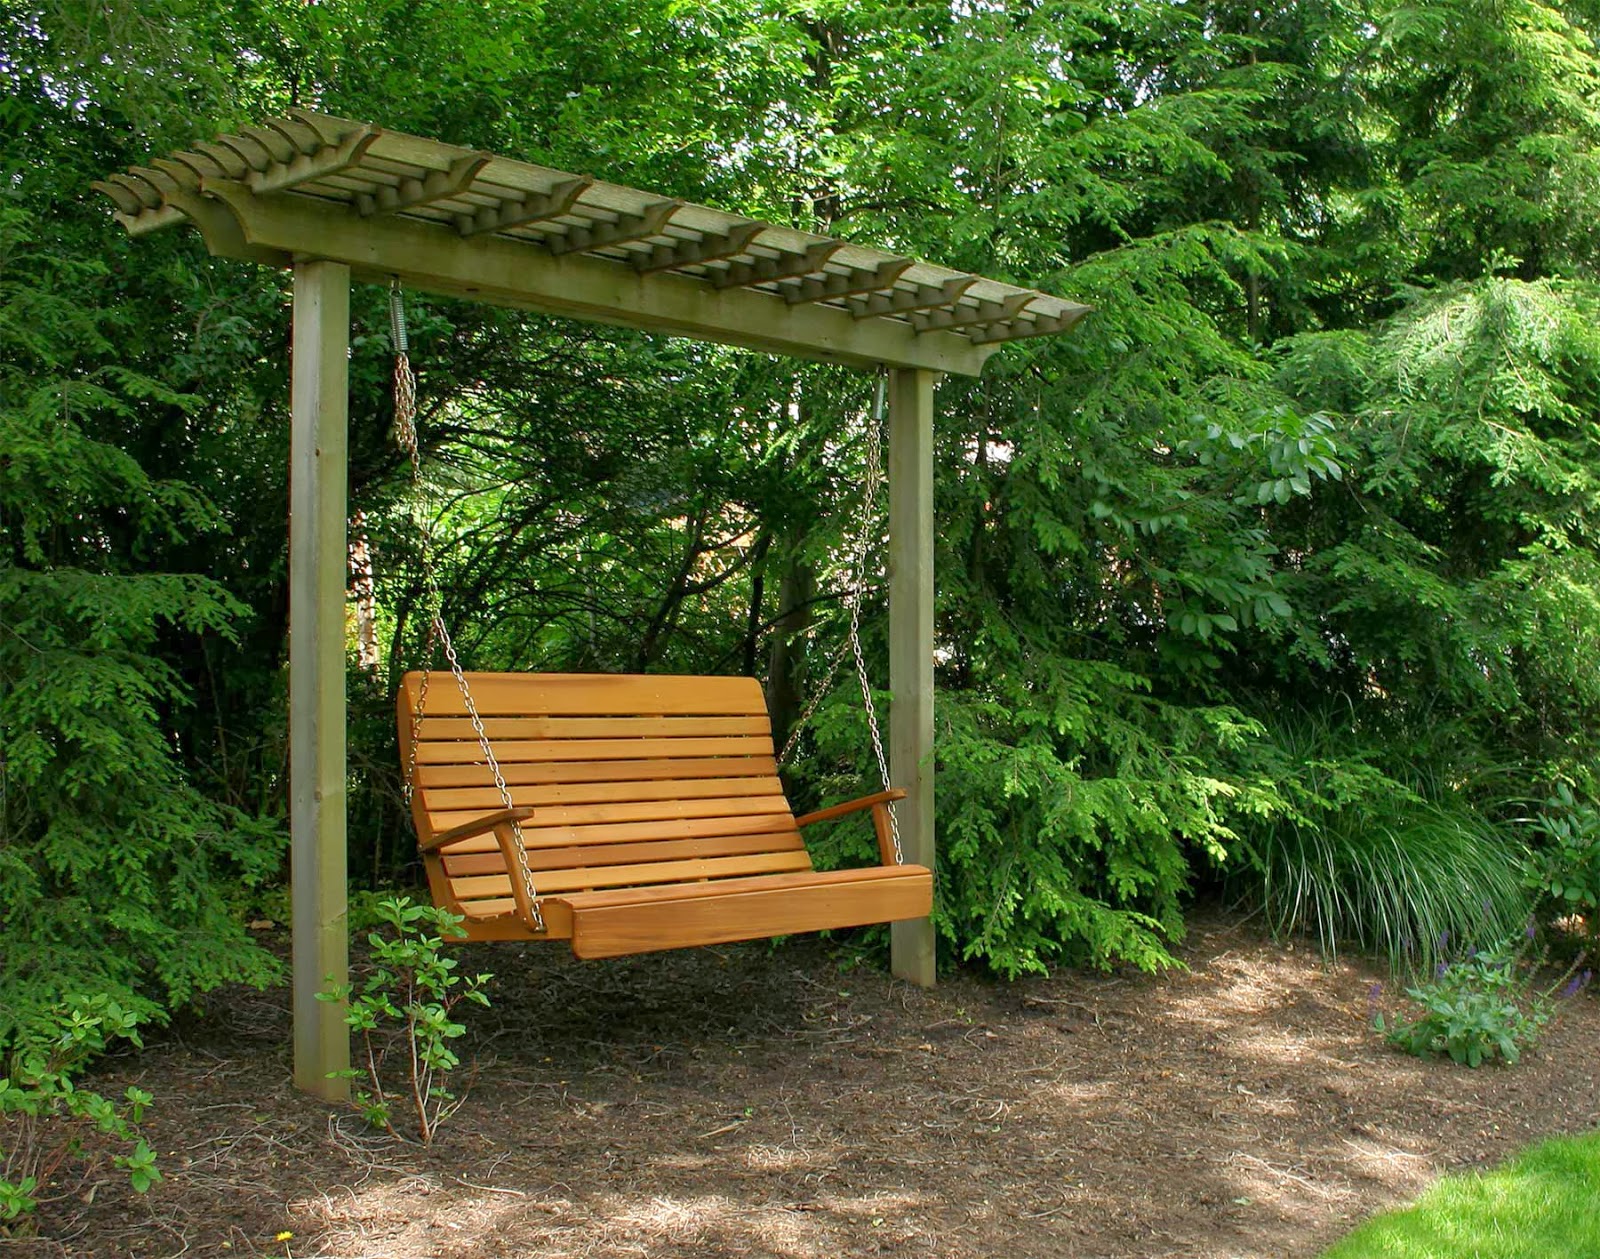 Garden Swings: The Enchanting Element in Your Backyard